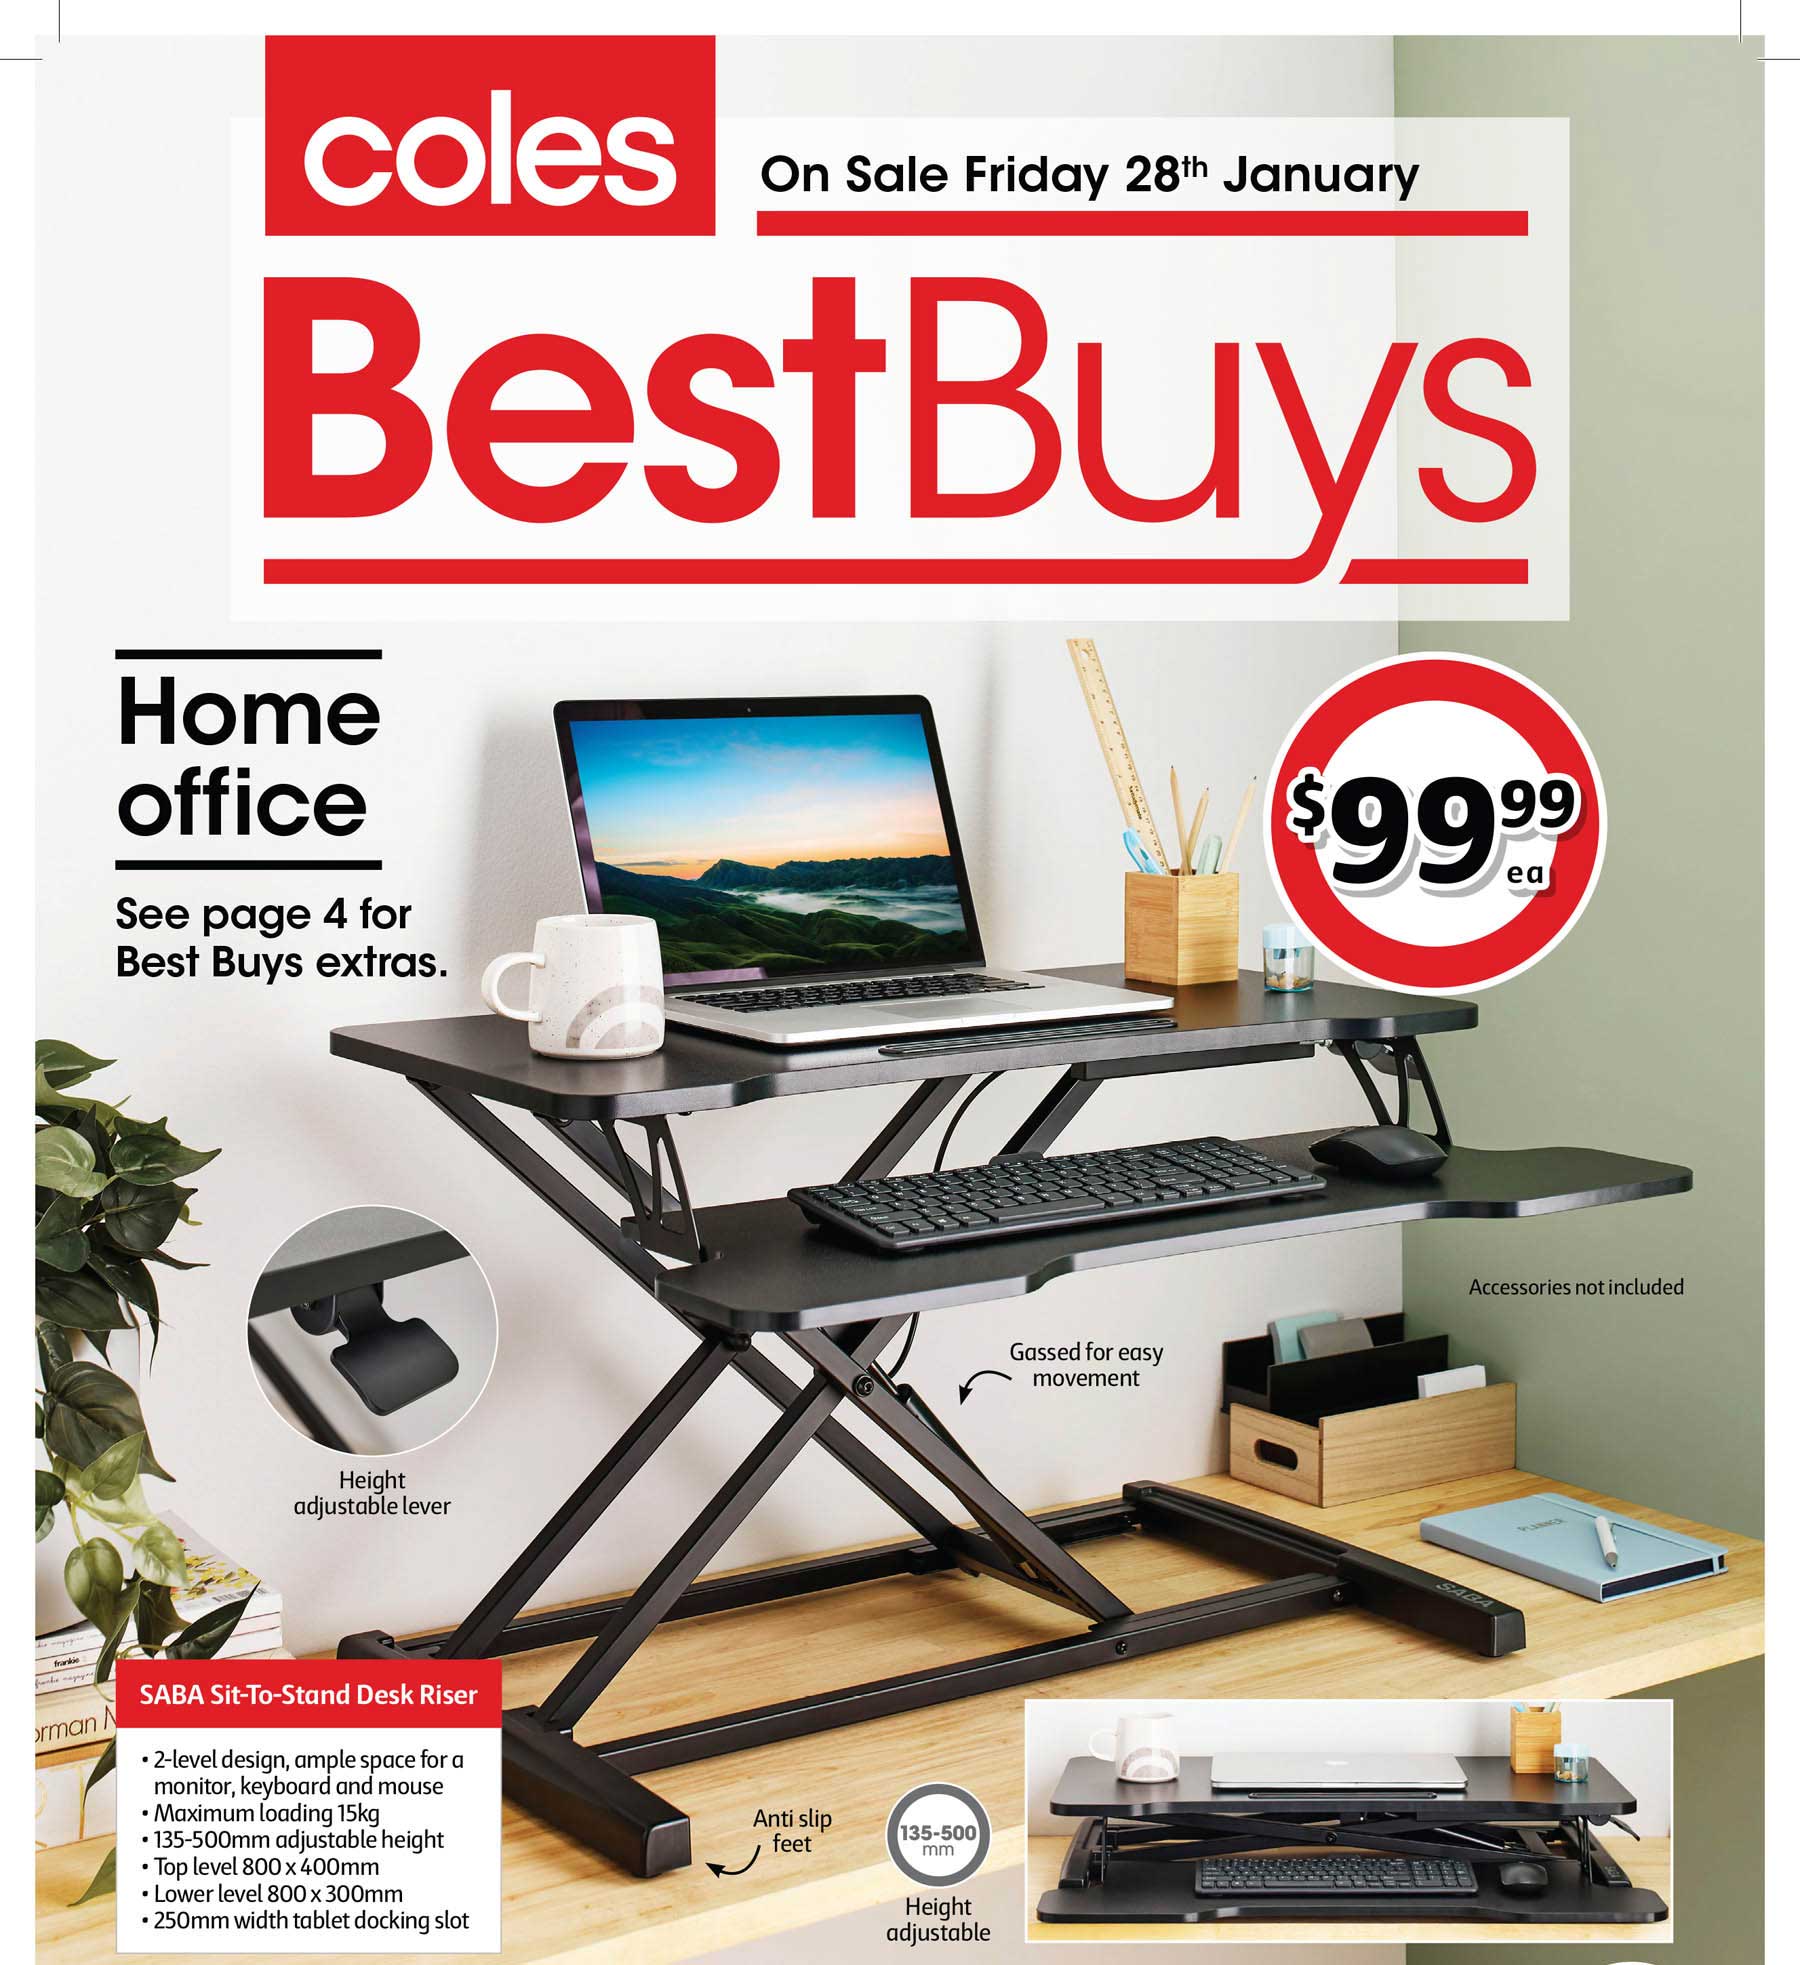 Coles Saba Sit-to-stand Desk Riser